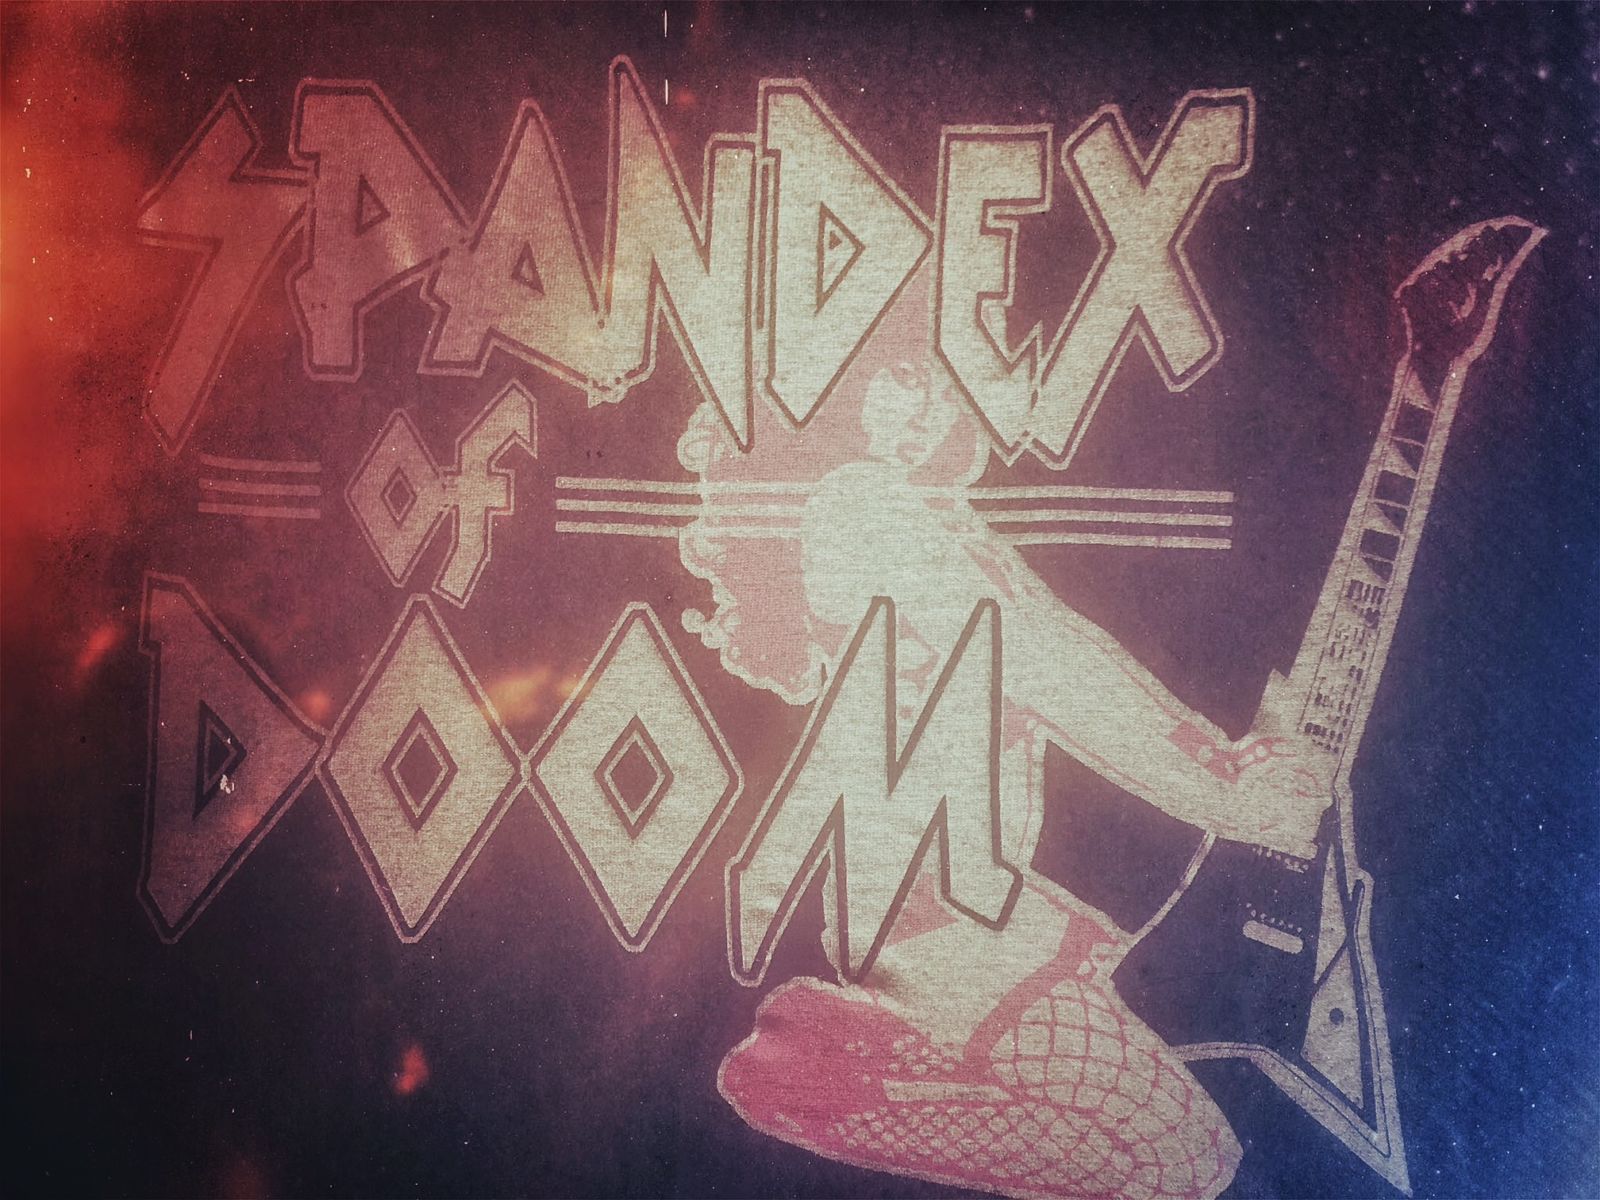 Spandex of Doom